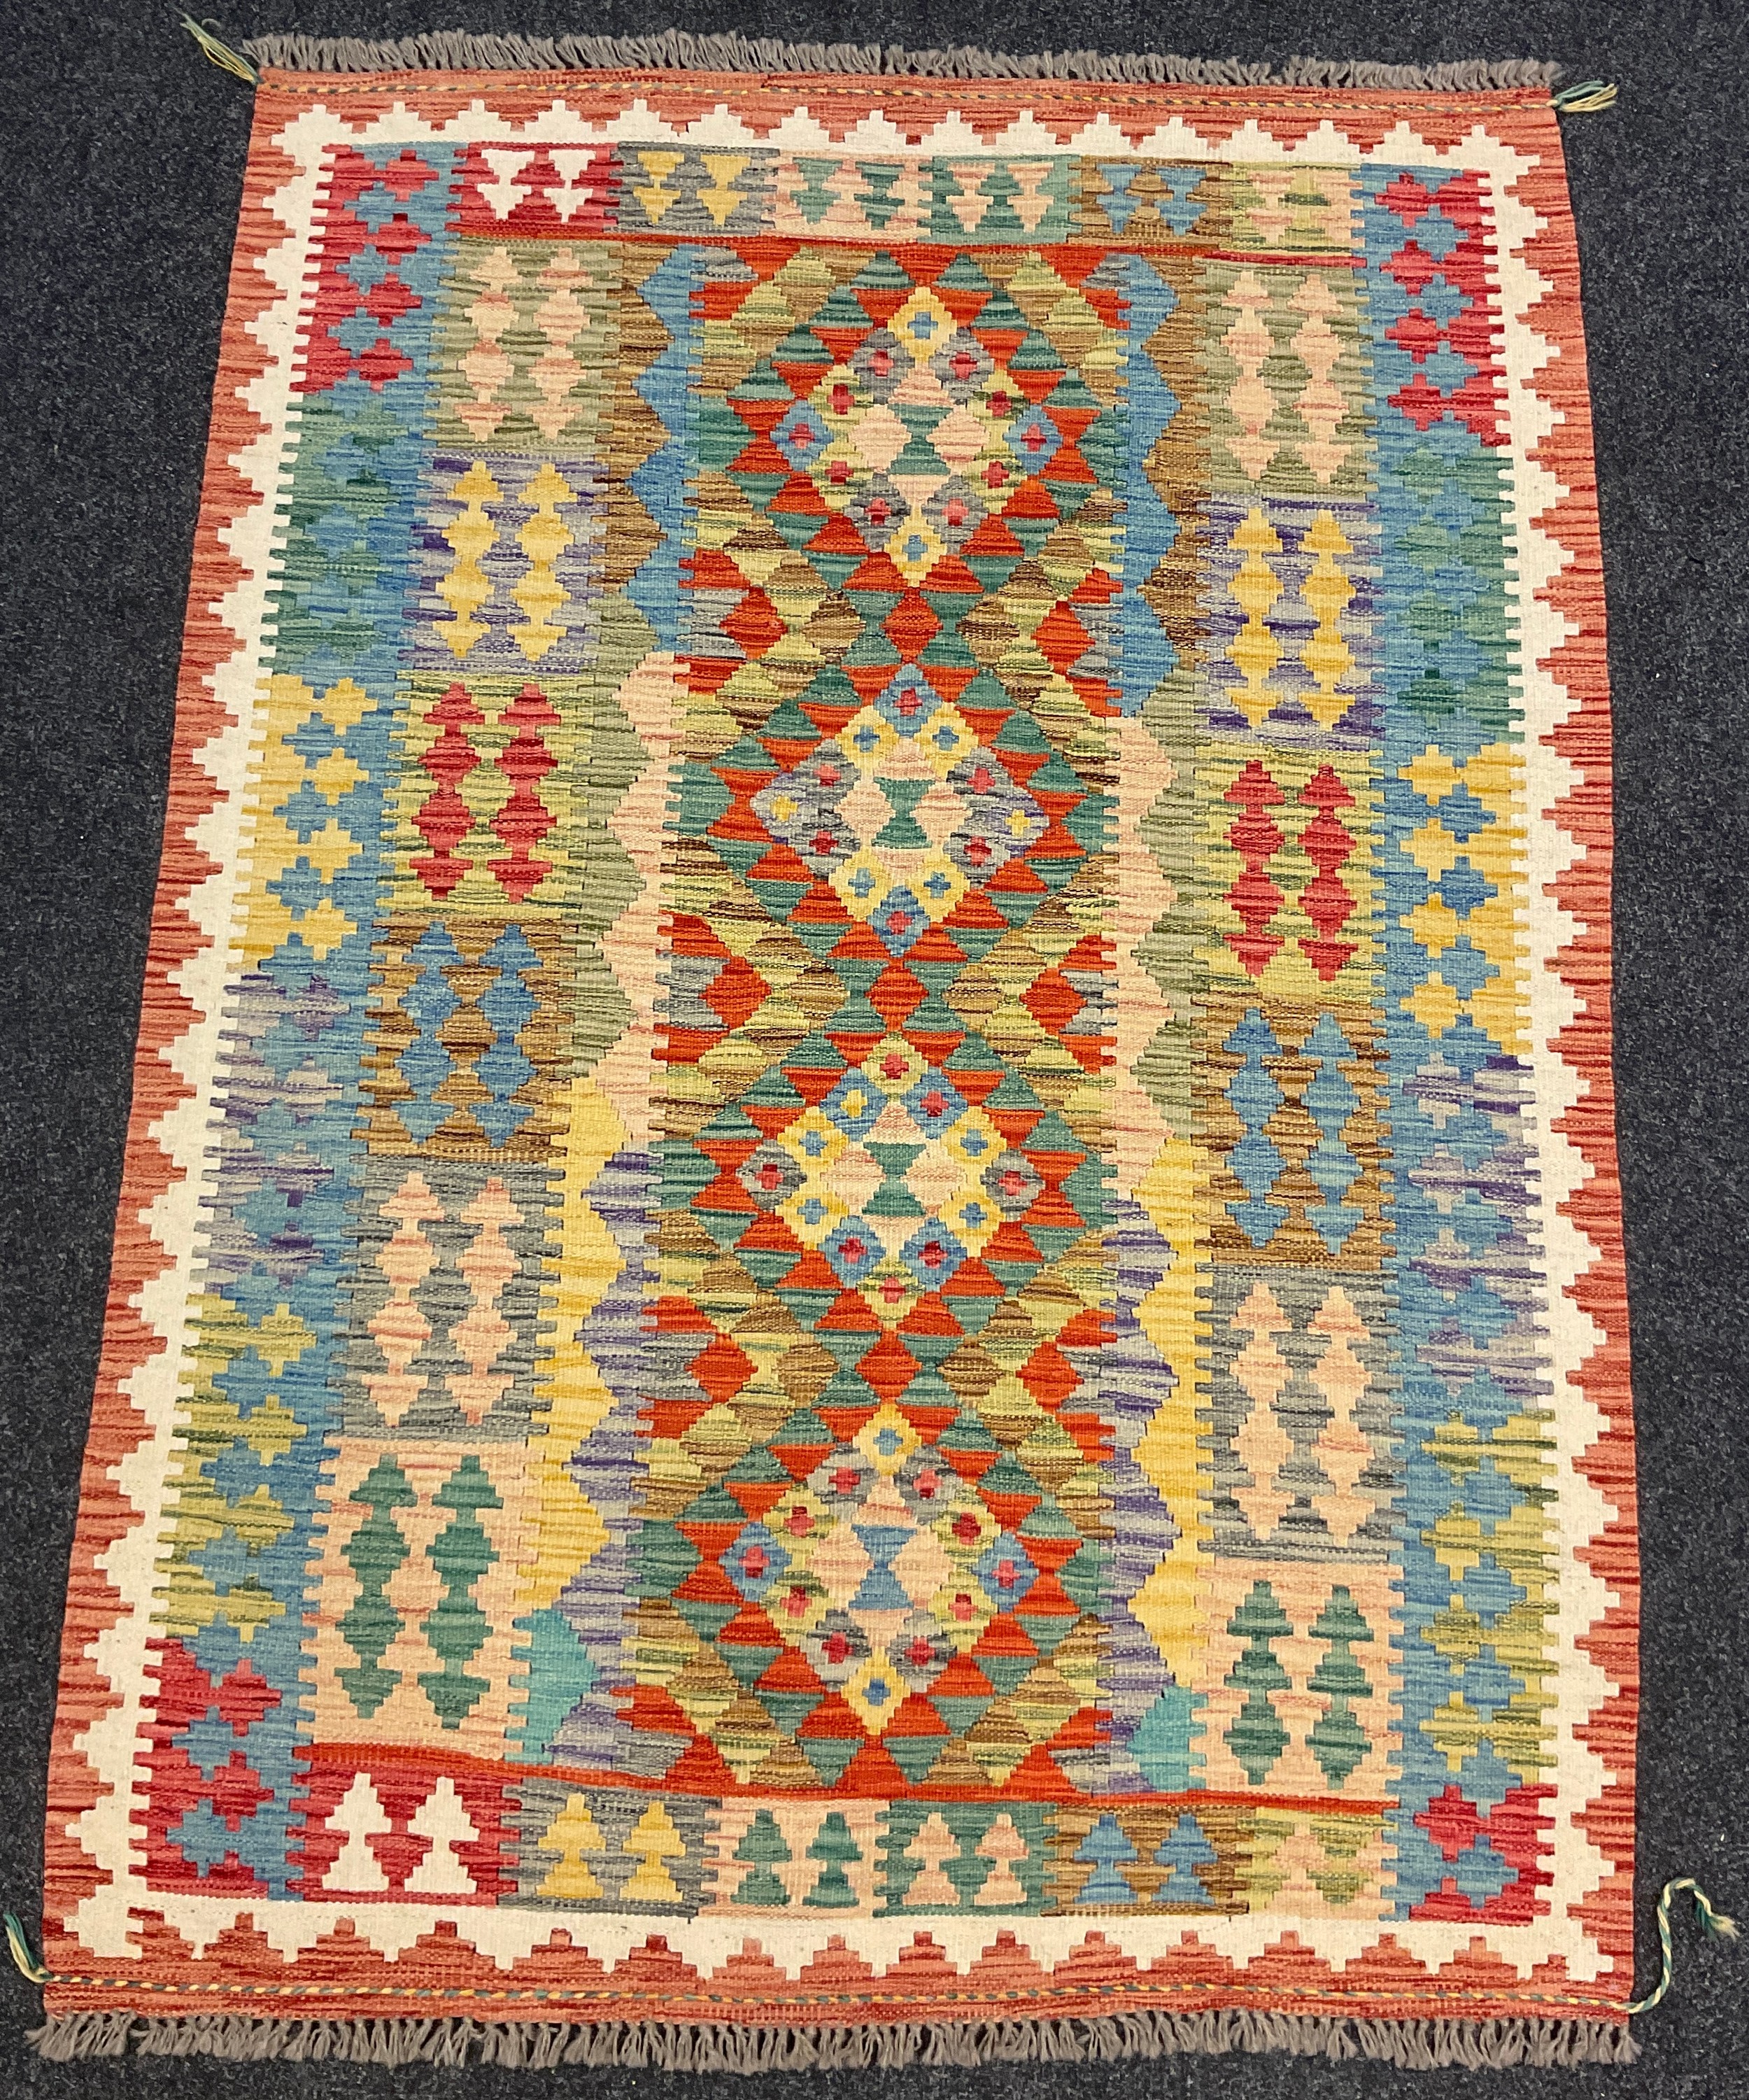 A Turkish Anatolian Kilim rug / carpet, 174cm x 131cm.